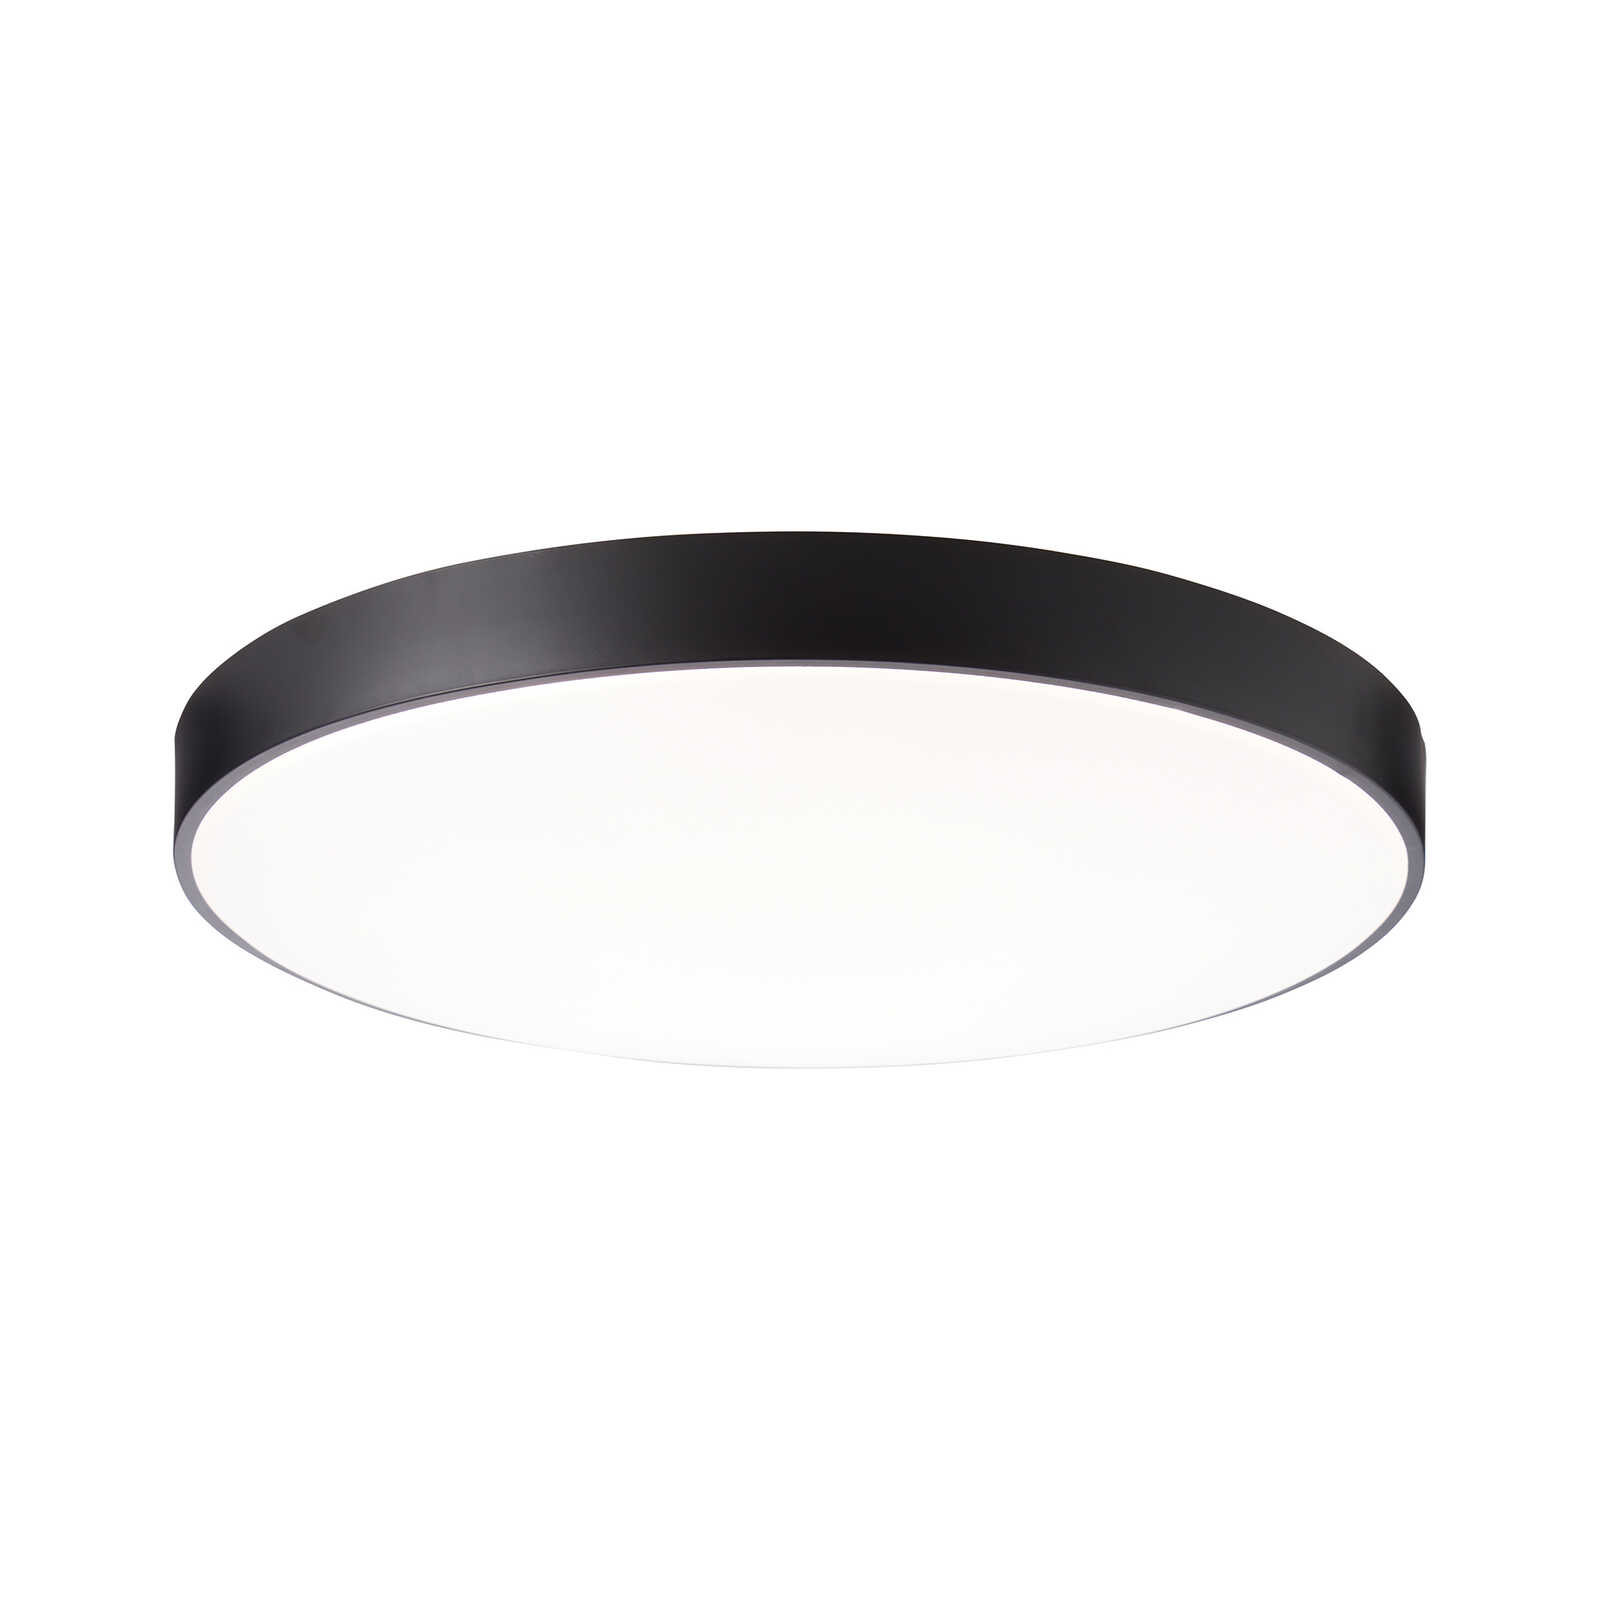 Plastic ceiling light - Niklas 11 - Black
